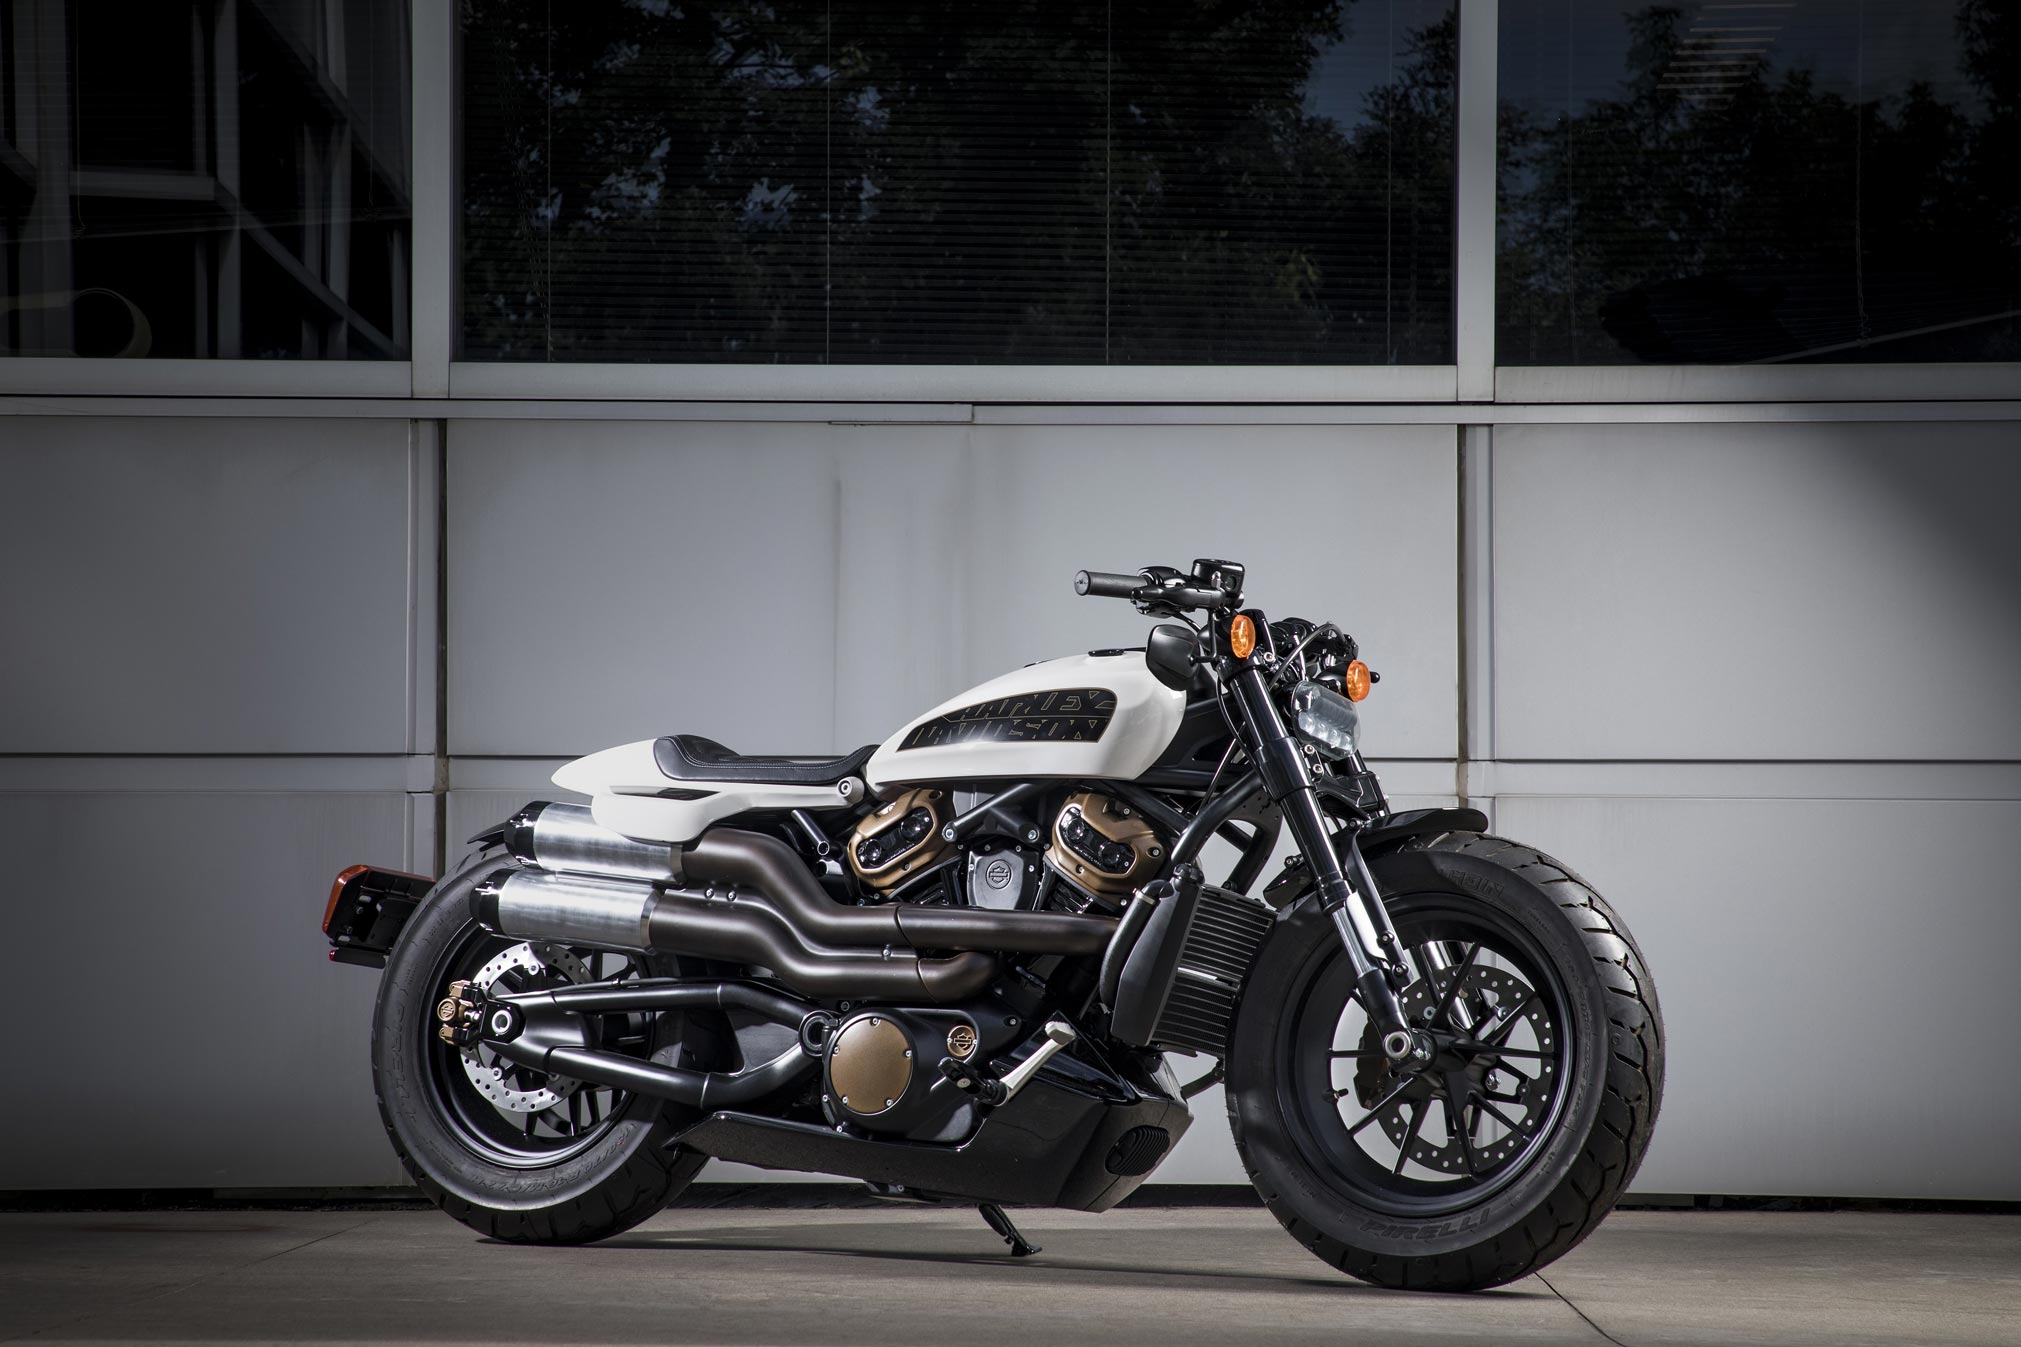 2021 Harley Davidson Custom Preview Guide Total Motorcycle